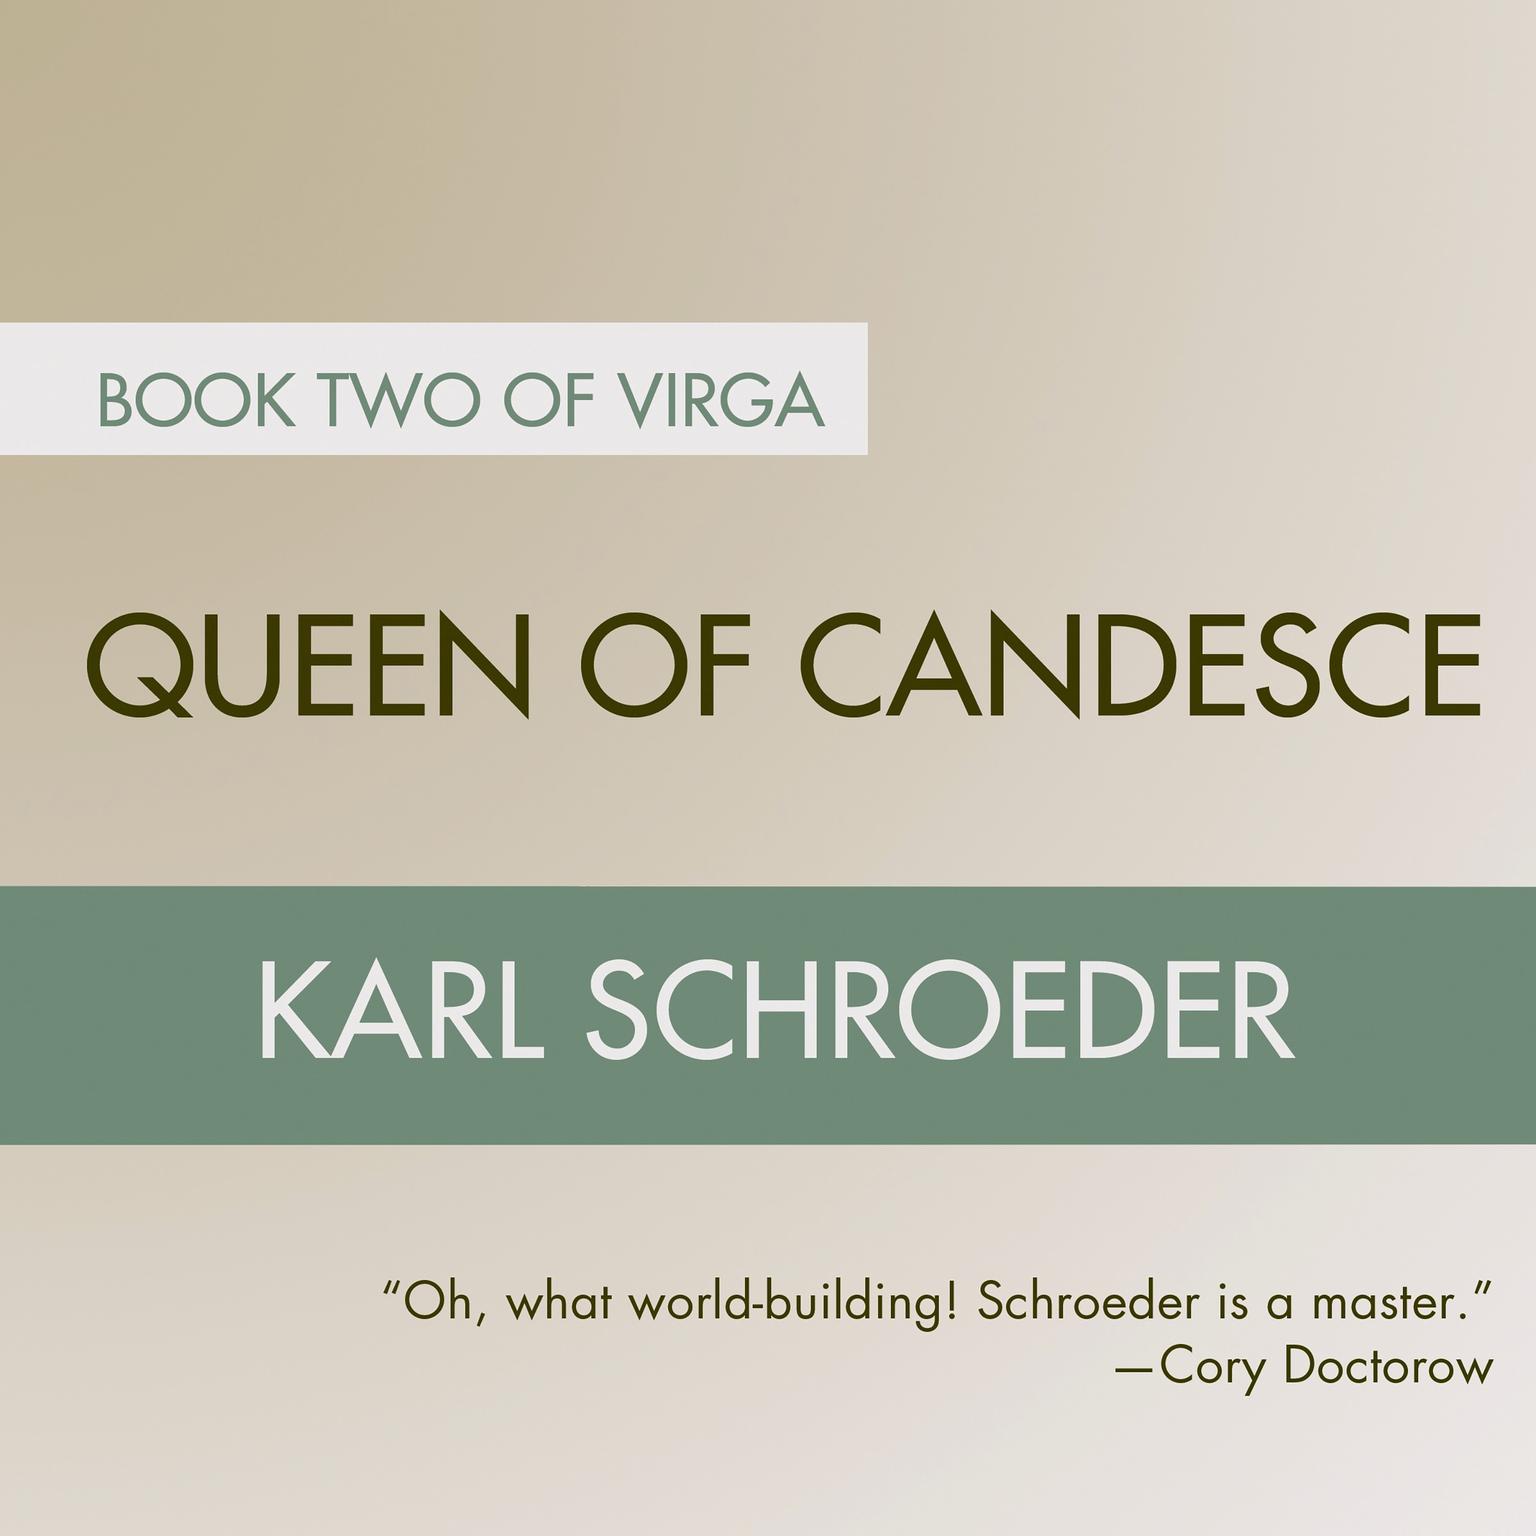 Queen of Candesce: Book Two of Virga Audiobook, by Karl Schroeder